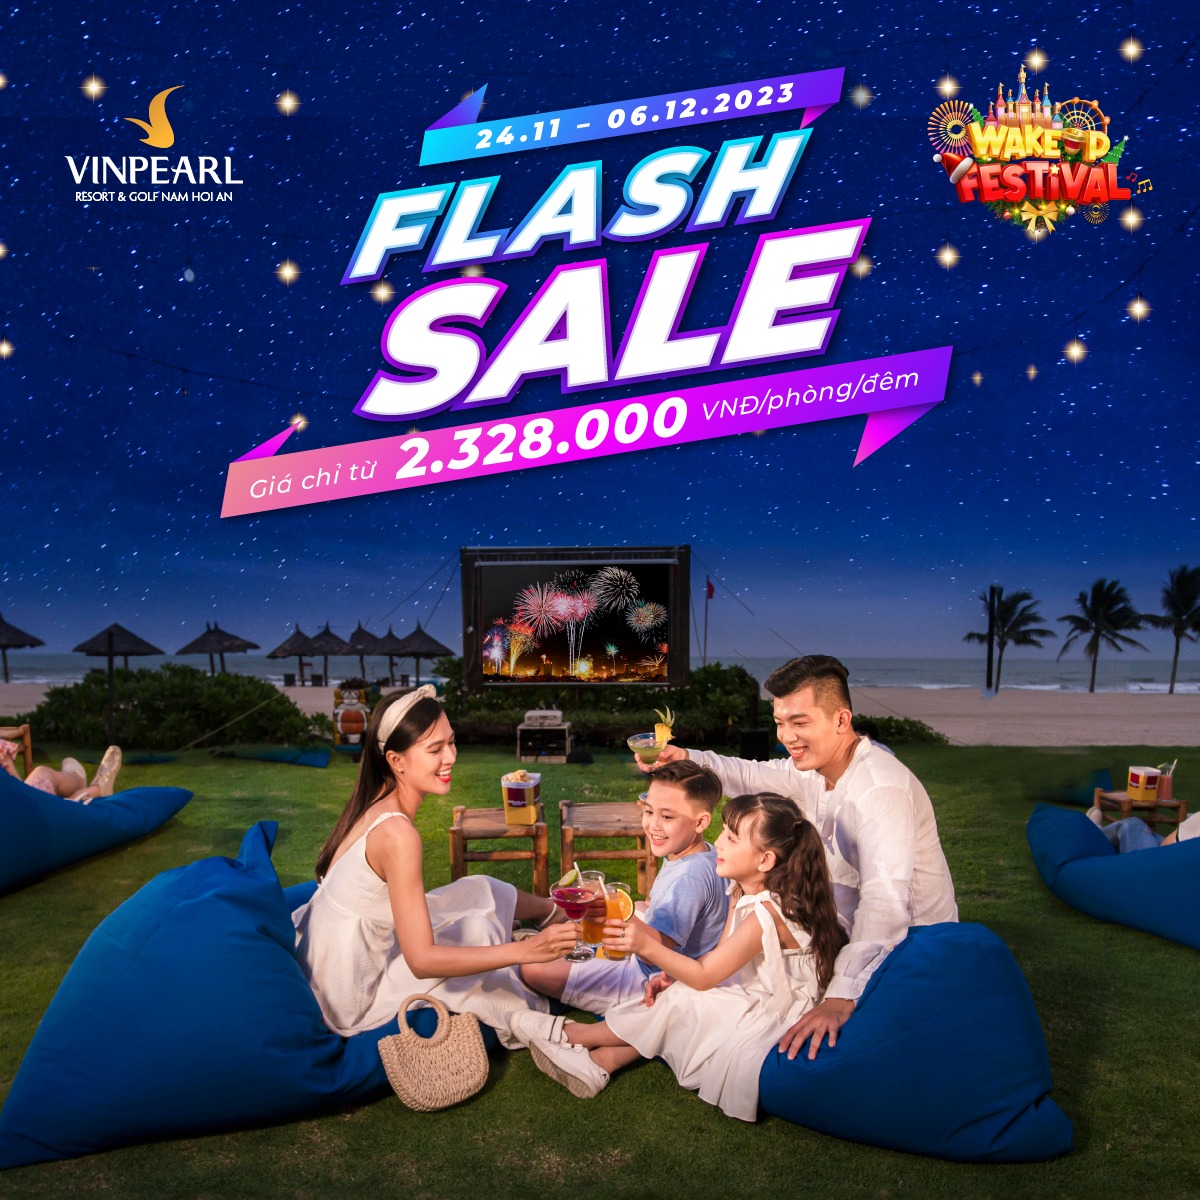 vinpearl-nam-hoi-an-flash-sales-save-up-to-50-chi-tu-1160k-nguoi-dem